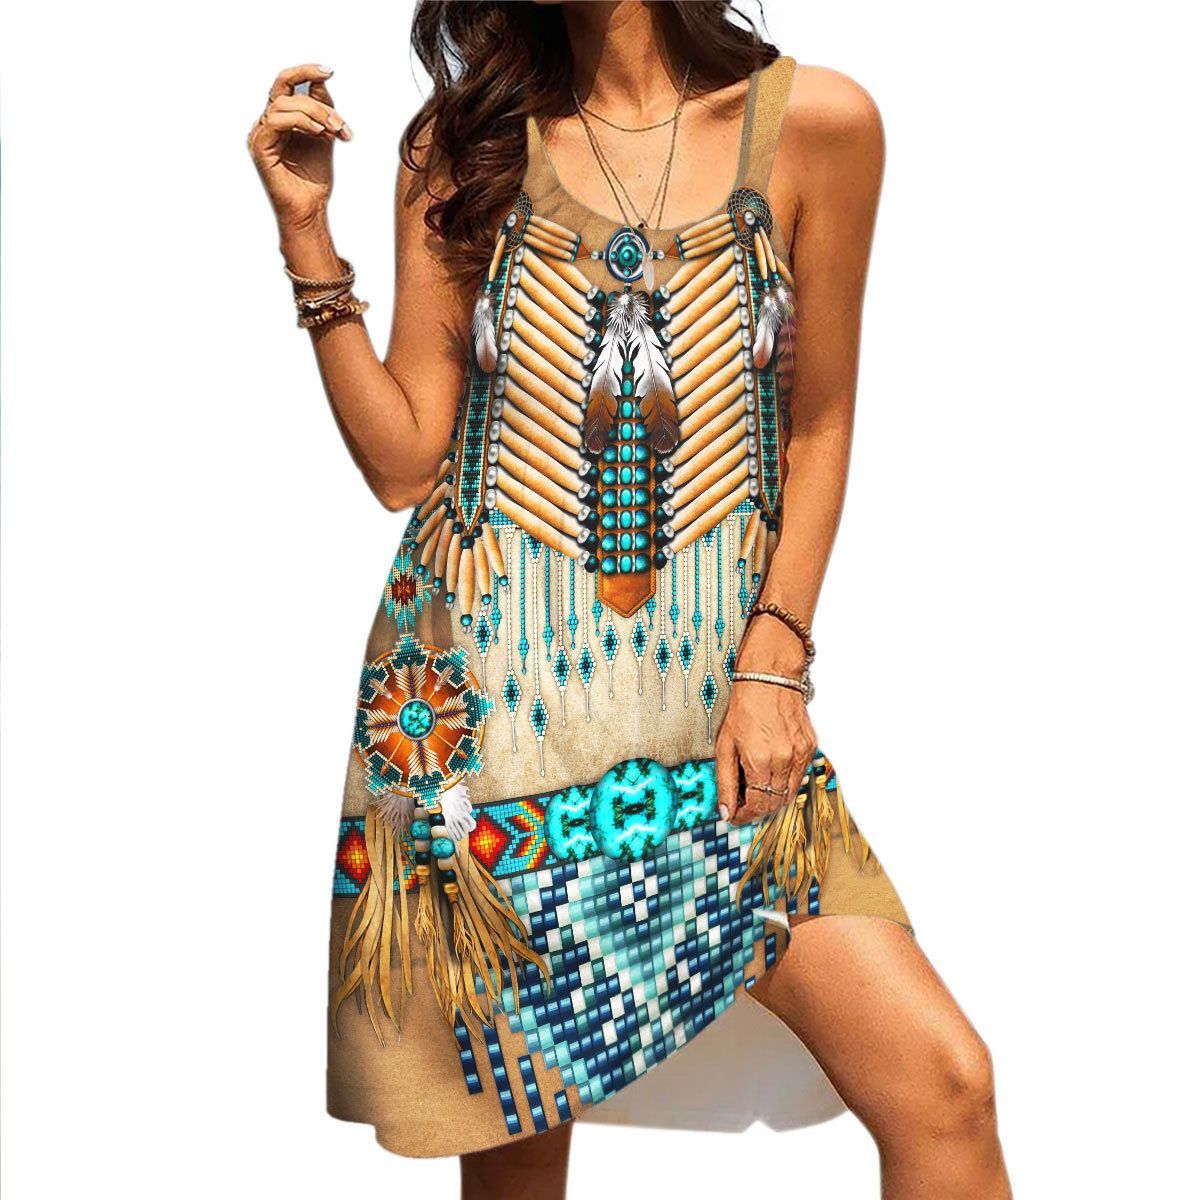 Native American Traditional Sleeveless Beach Dress - 49native.com